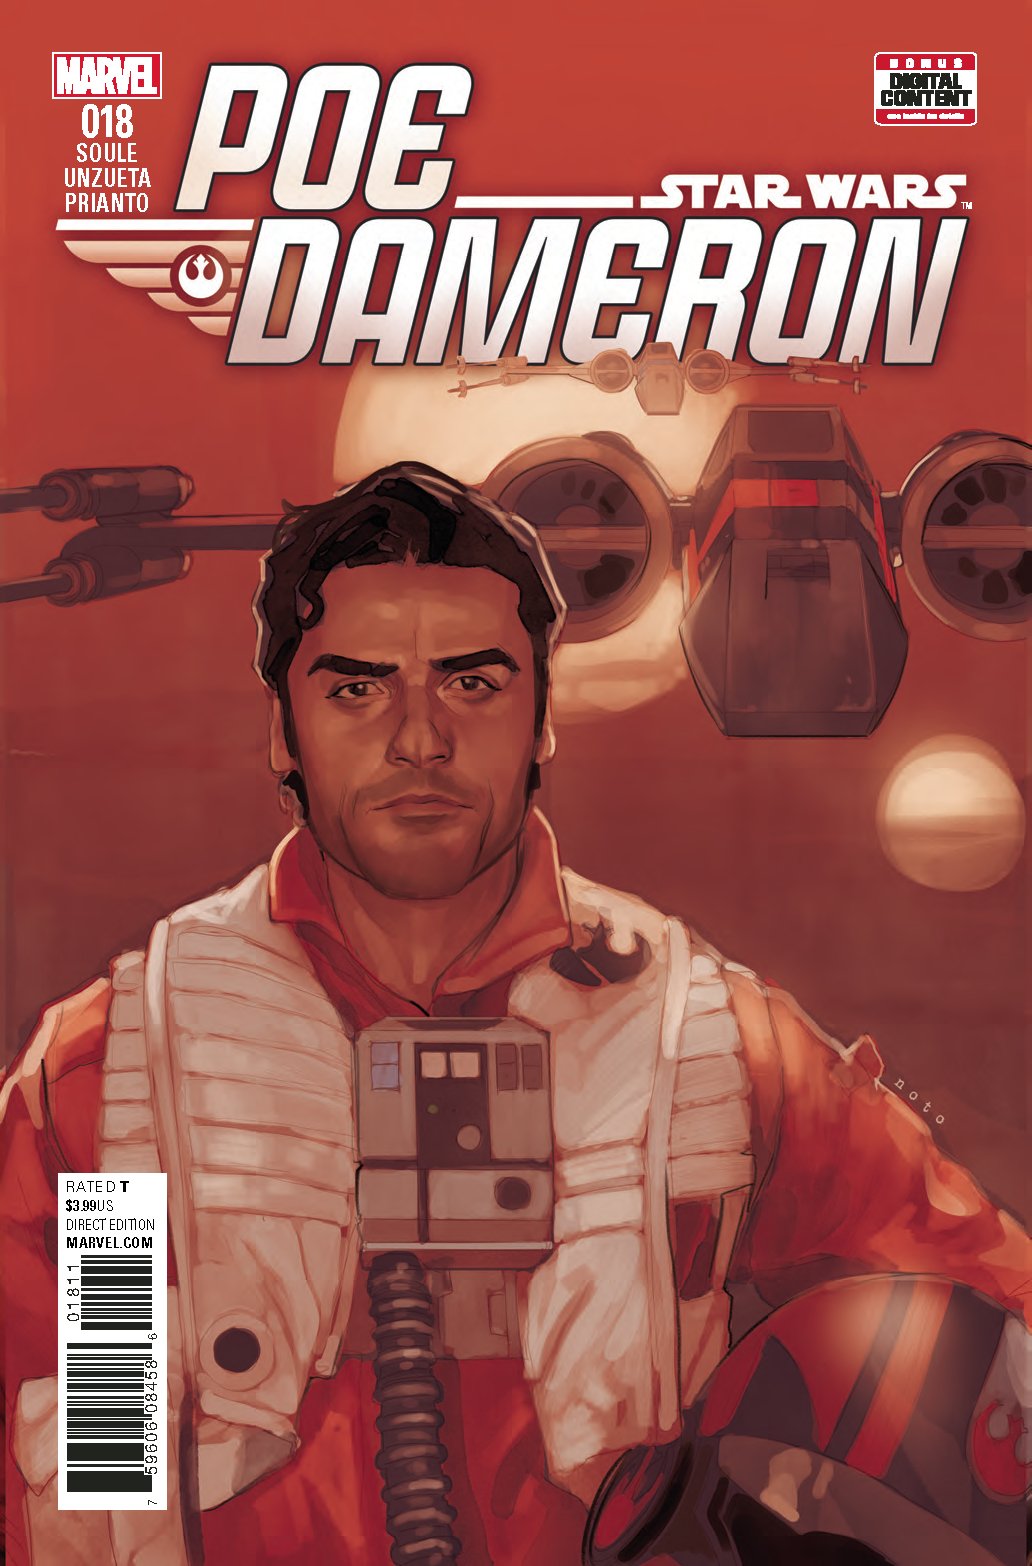 STAR WARS POE DAMERON #18 COVER